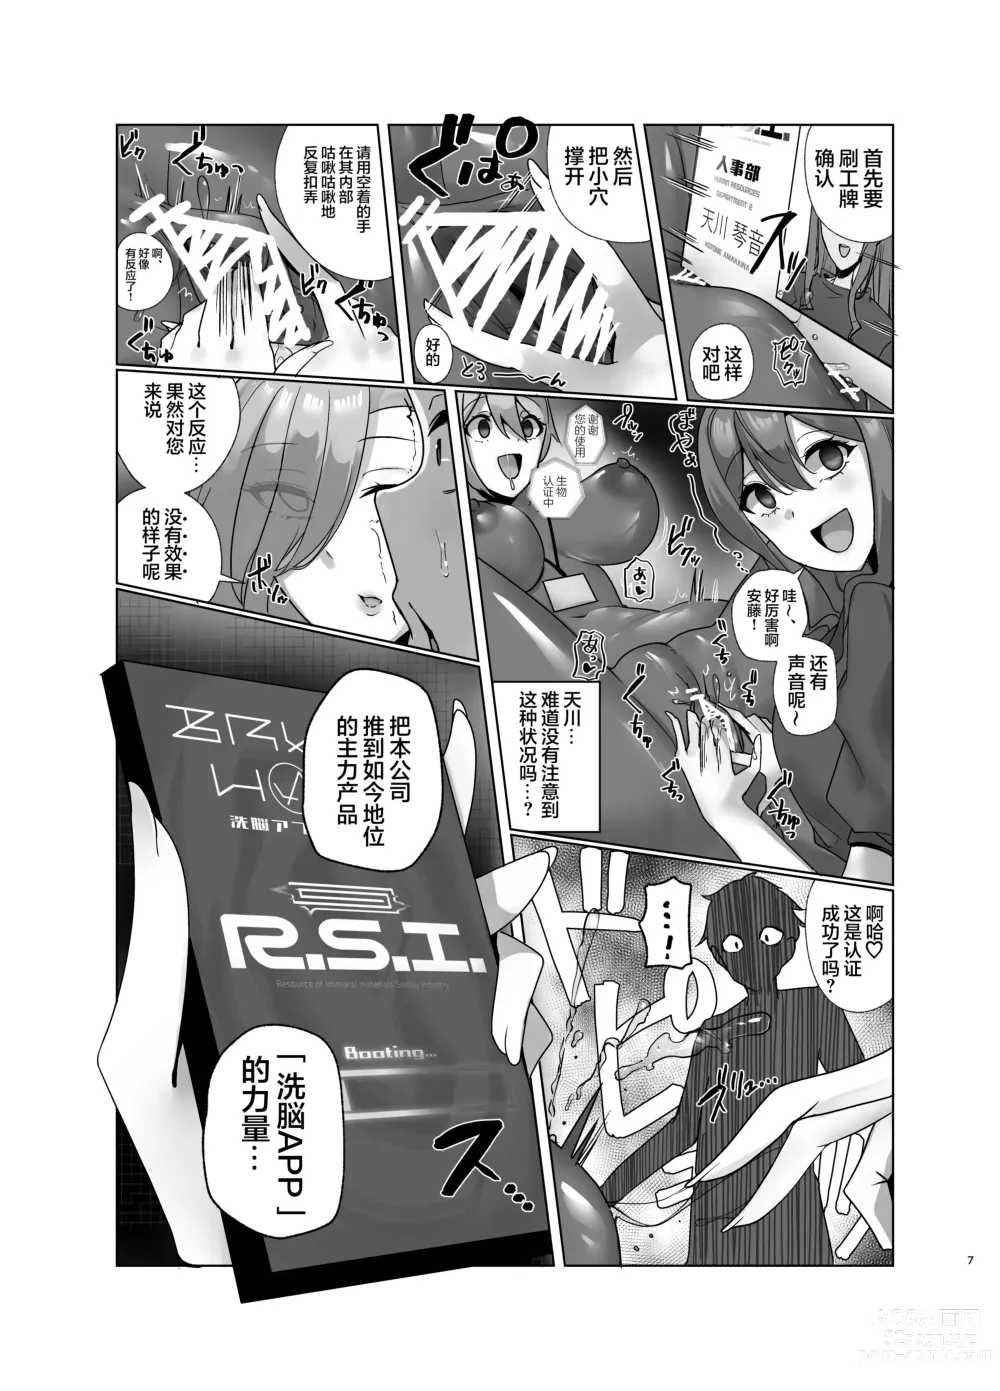 Page 7 of doujinshi 我、飛機杯立志成為! ~R.S.I.實習員工活動記錄~